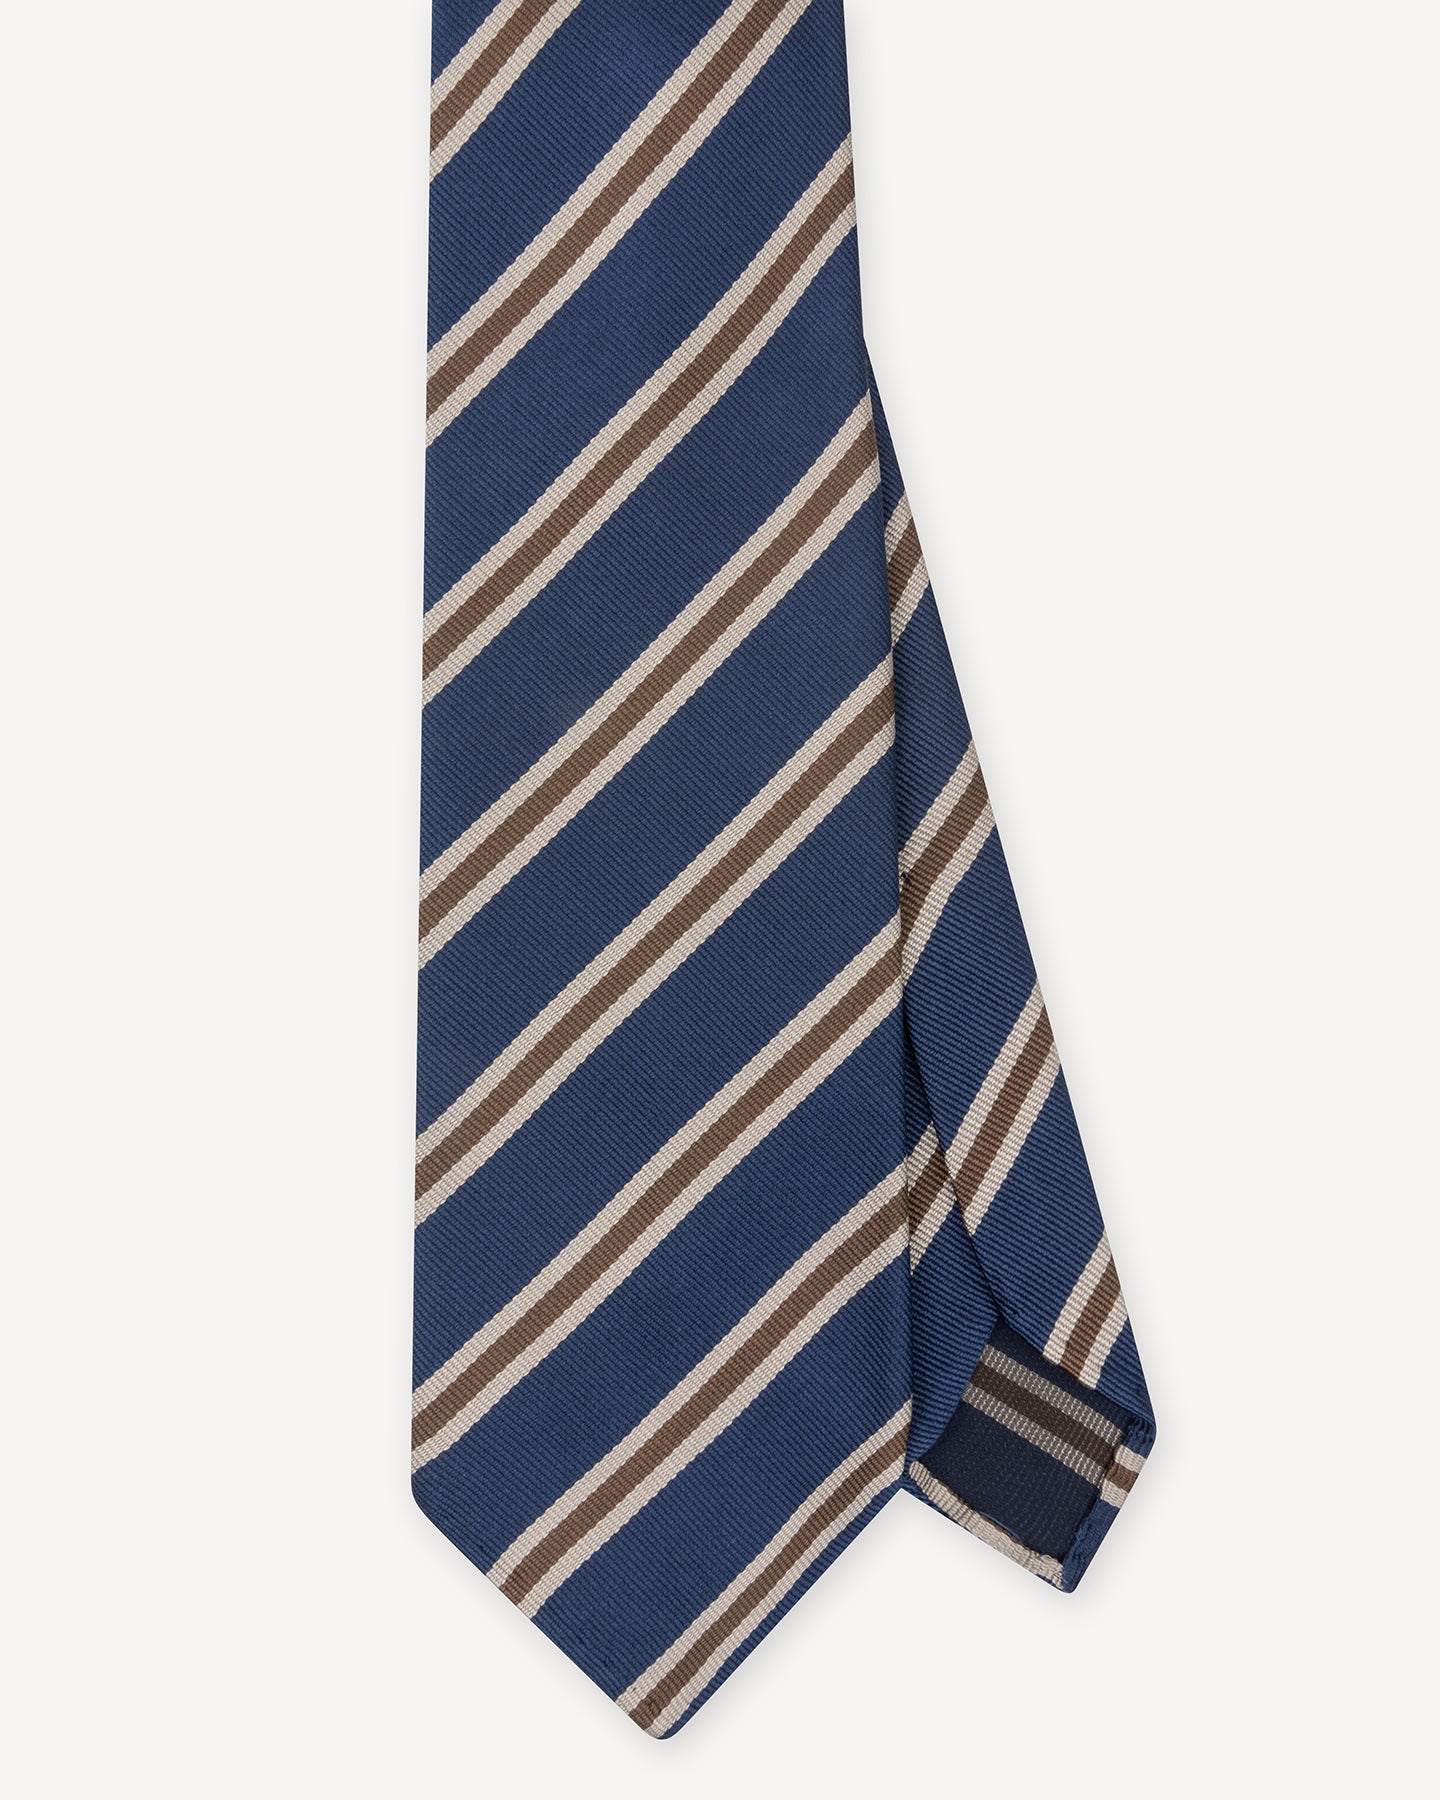 Blue, Tan and Mid Brown Regimental Stripe Repp Tie